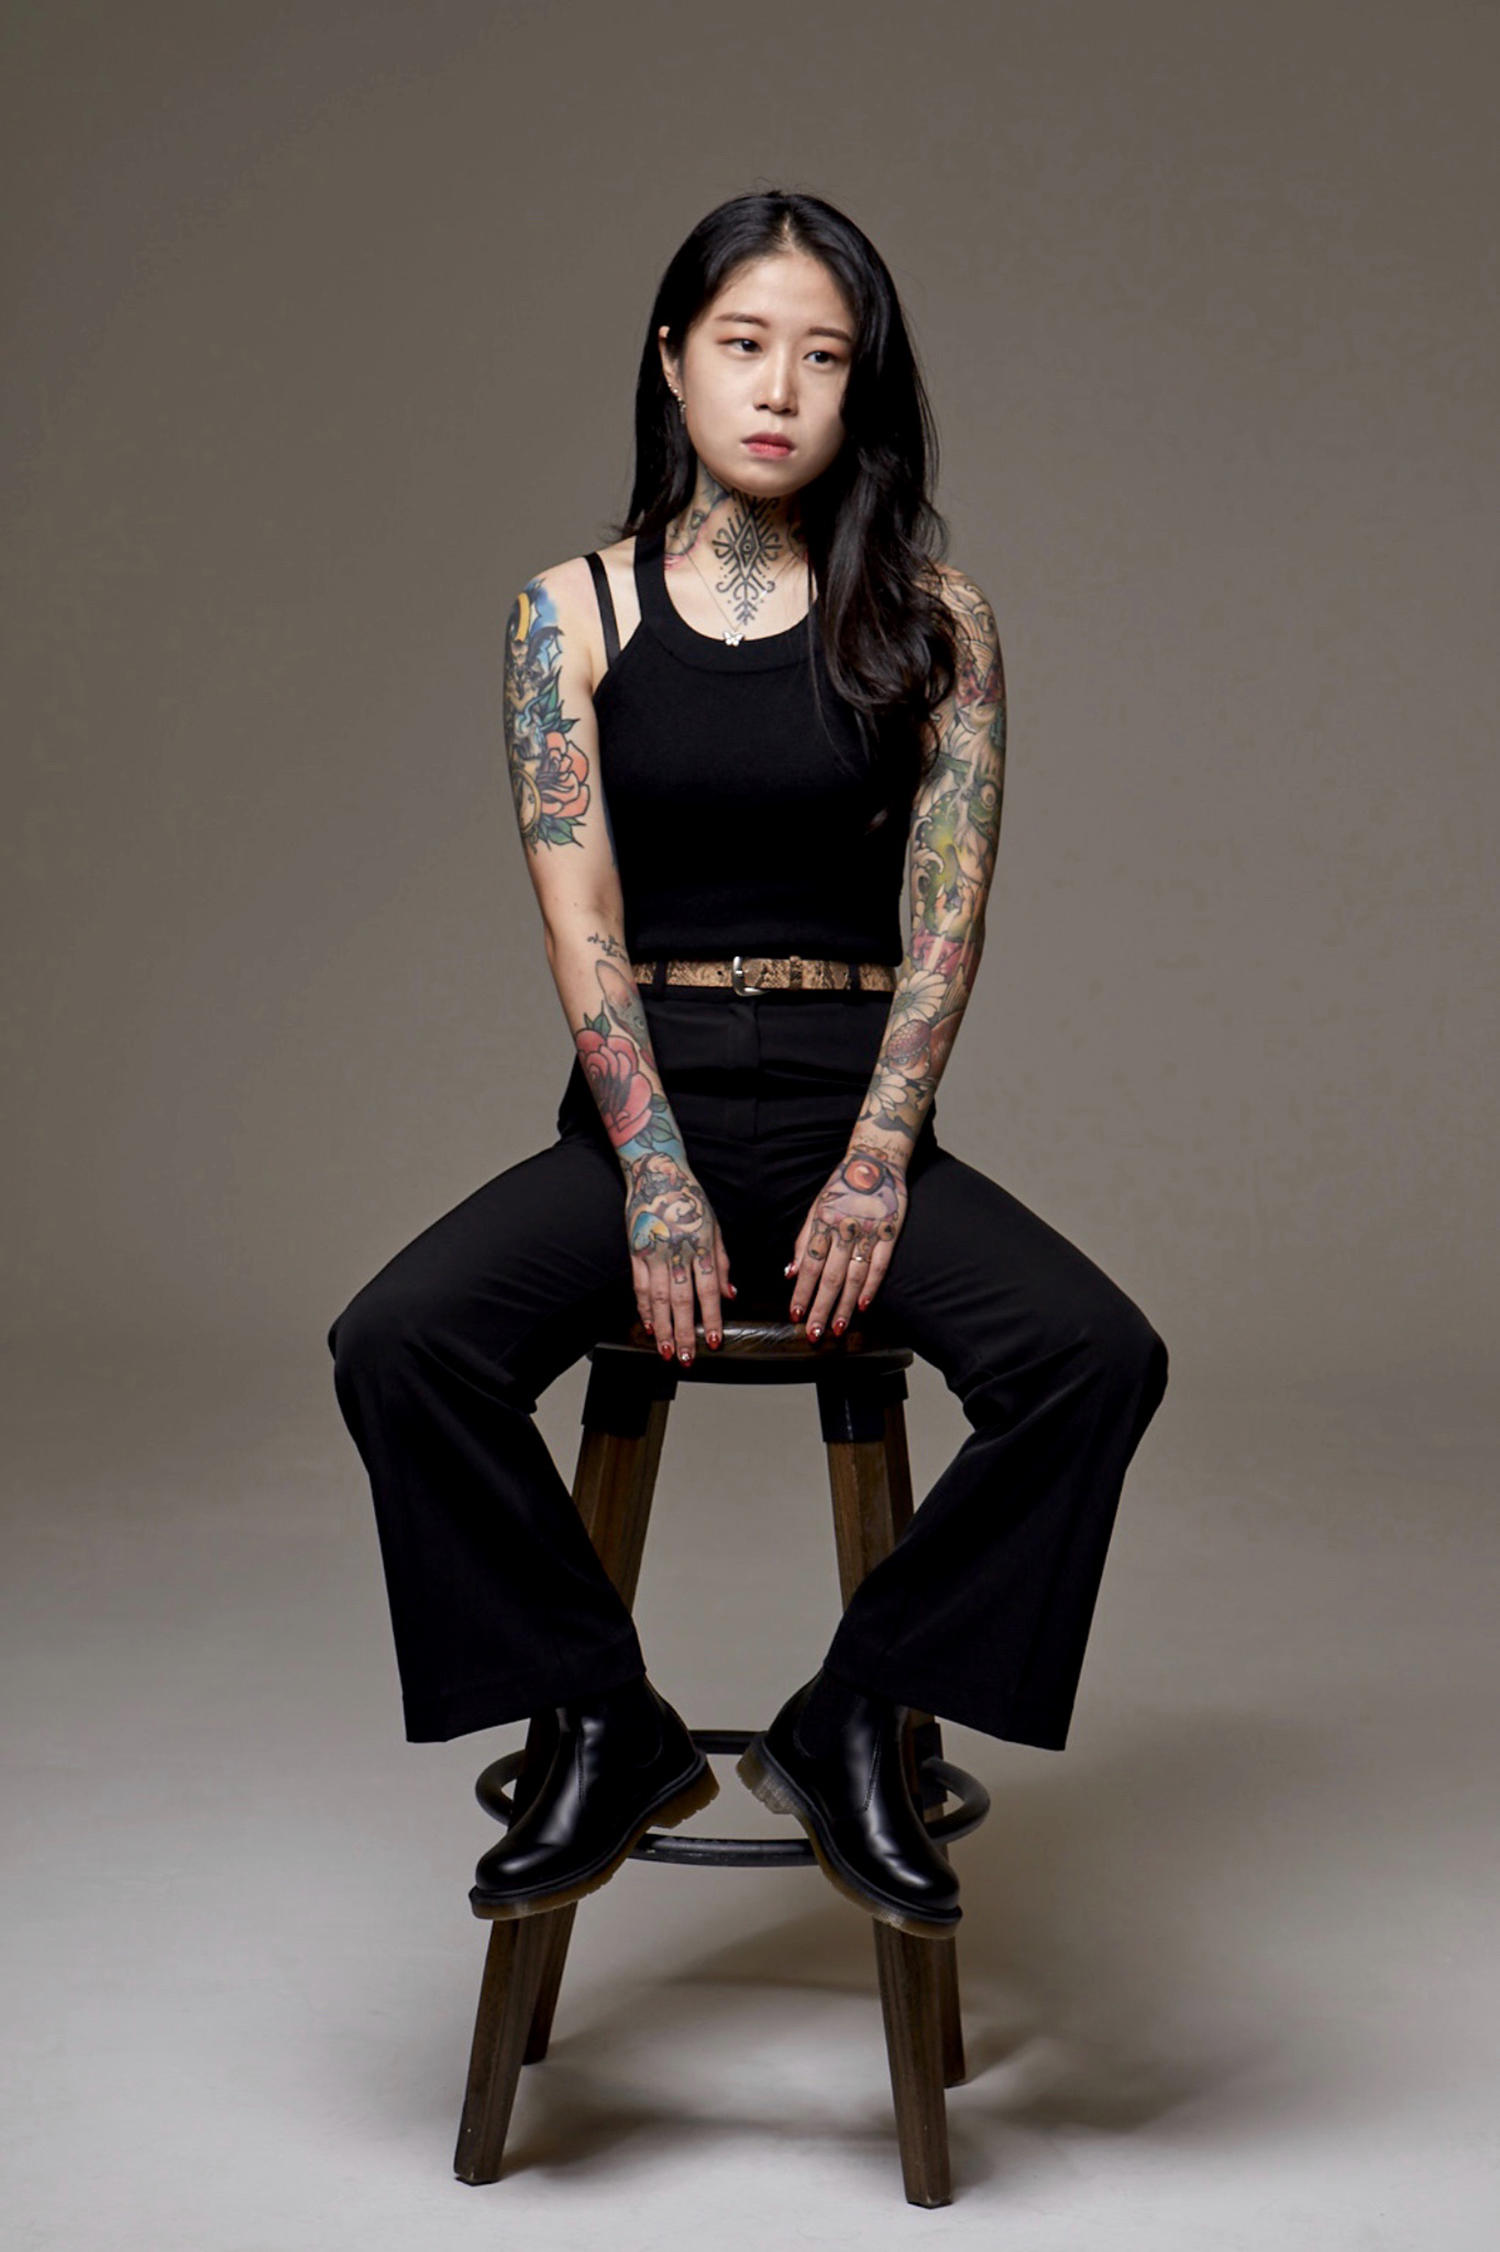 Yeono is a 27-year-old Korean tattooer